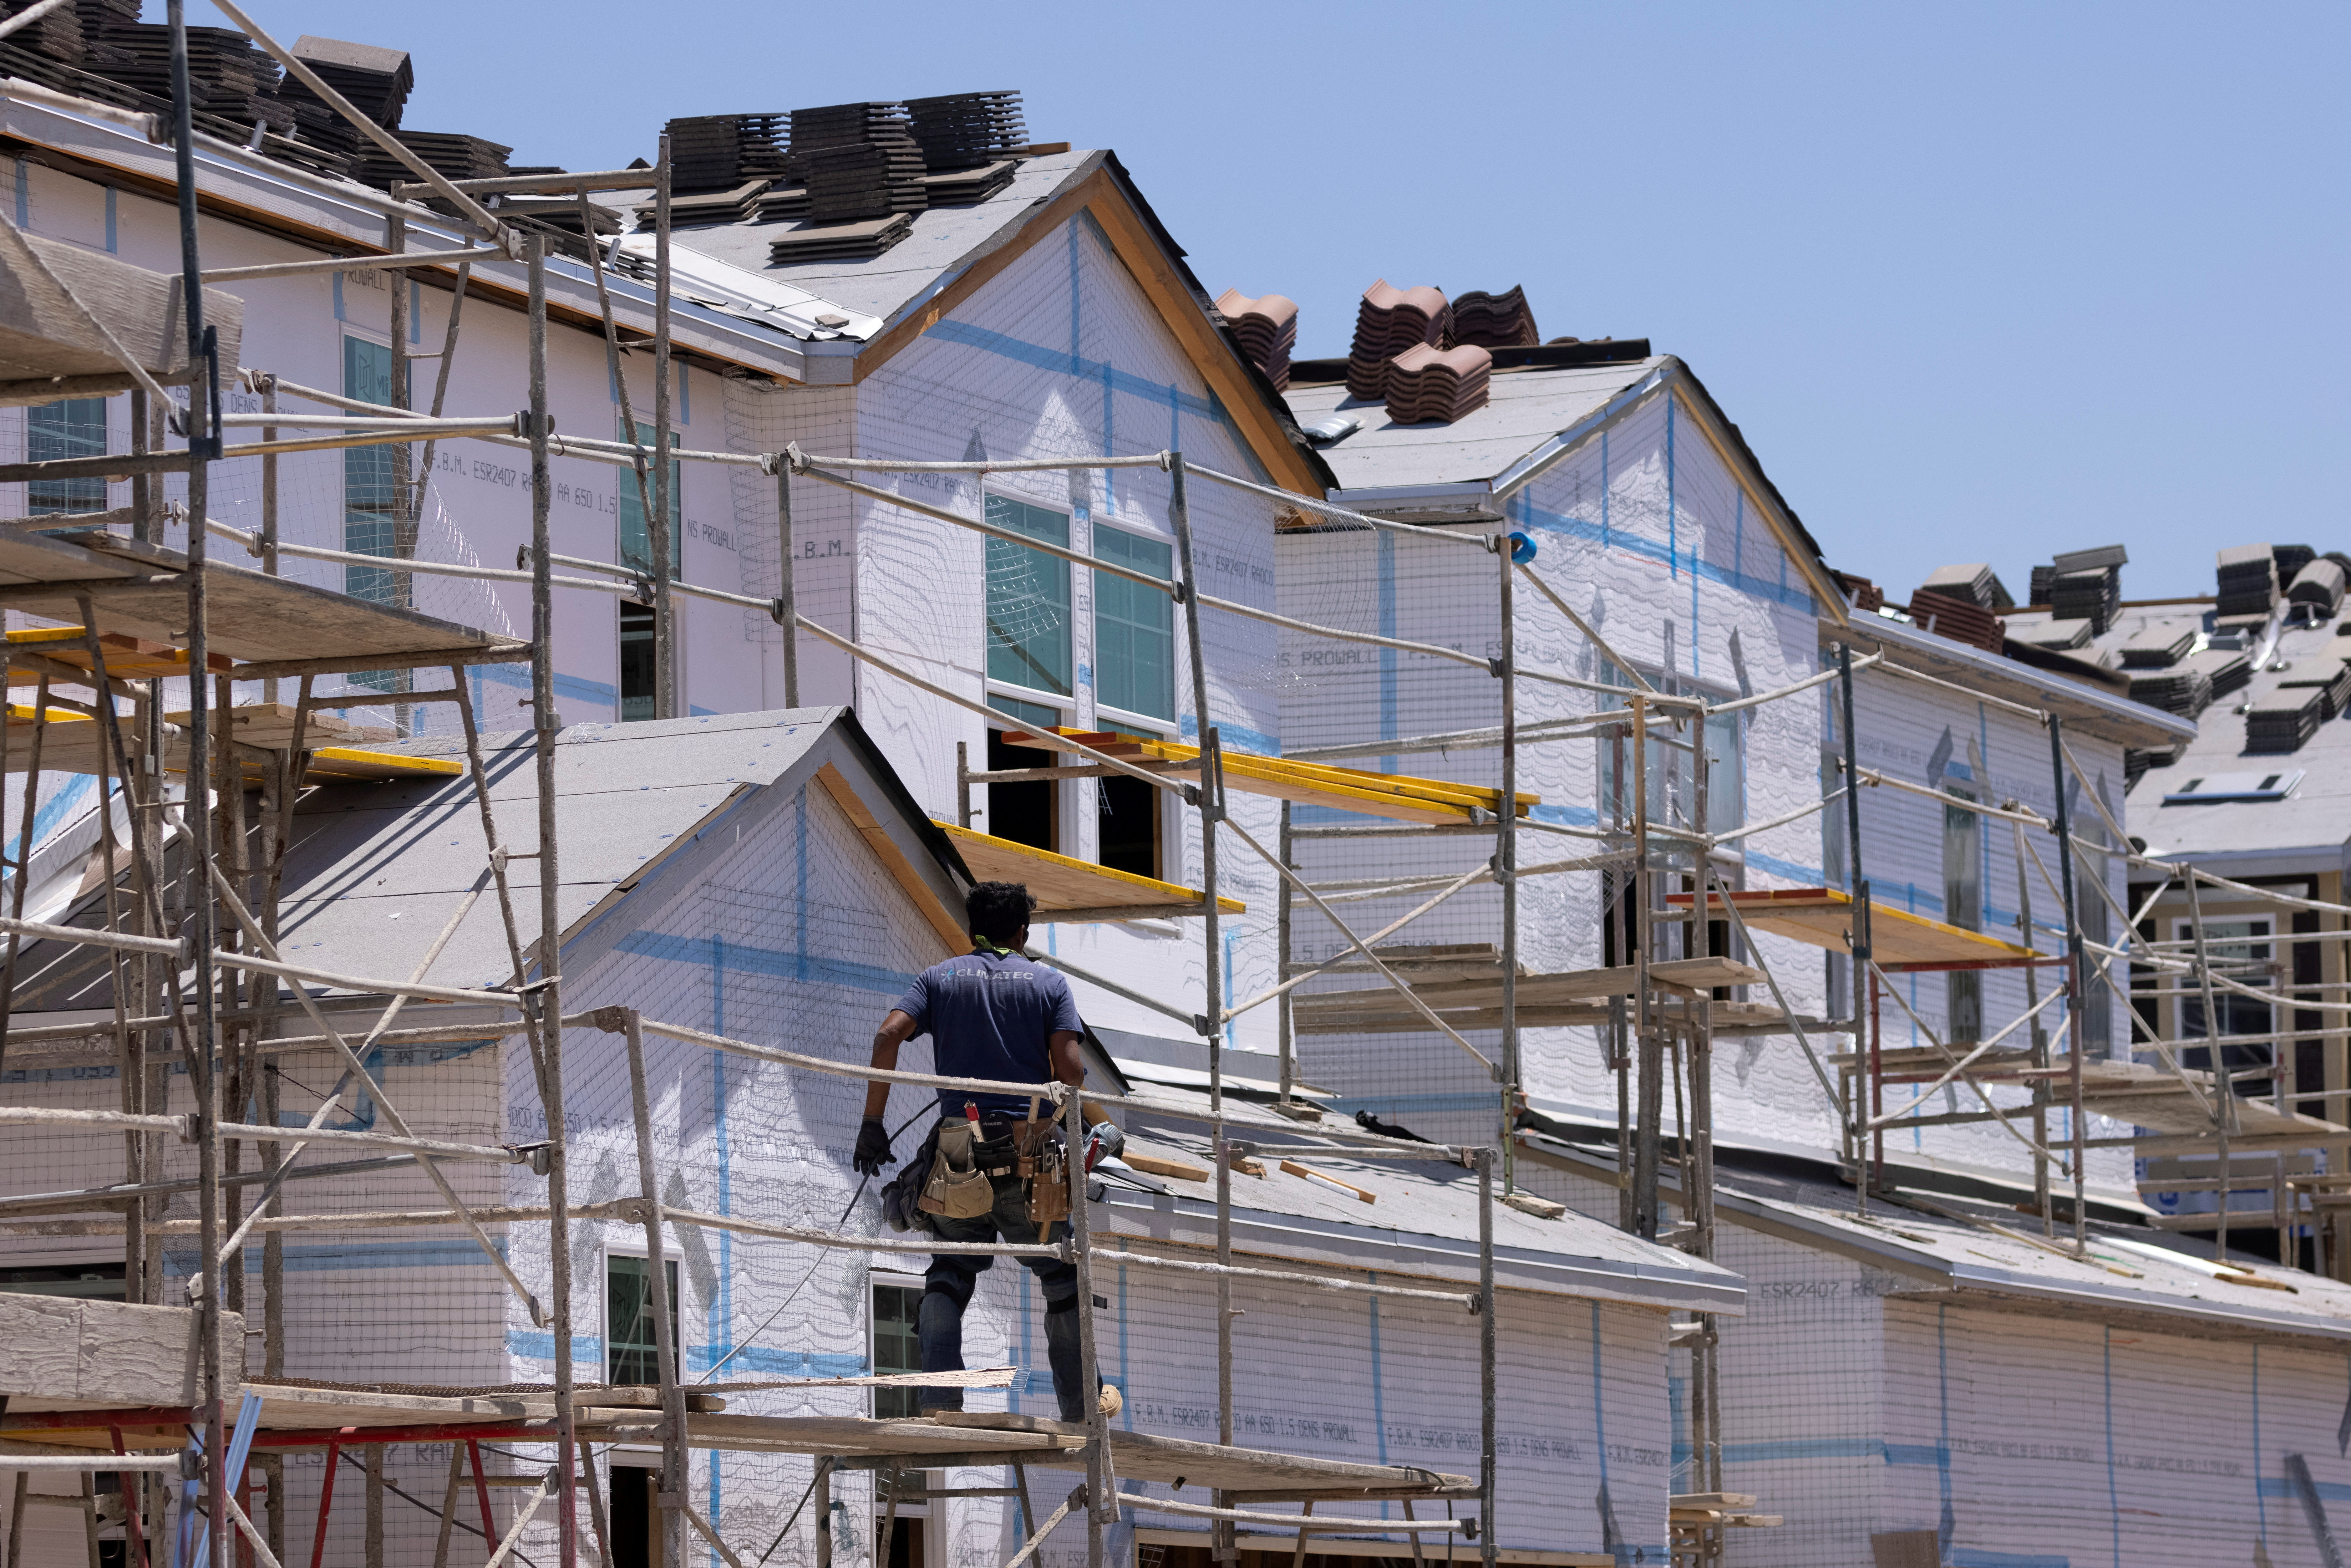 Residential home construction continues as California faces a housing shortage